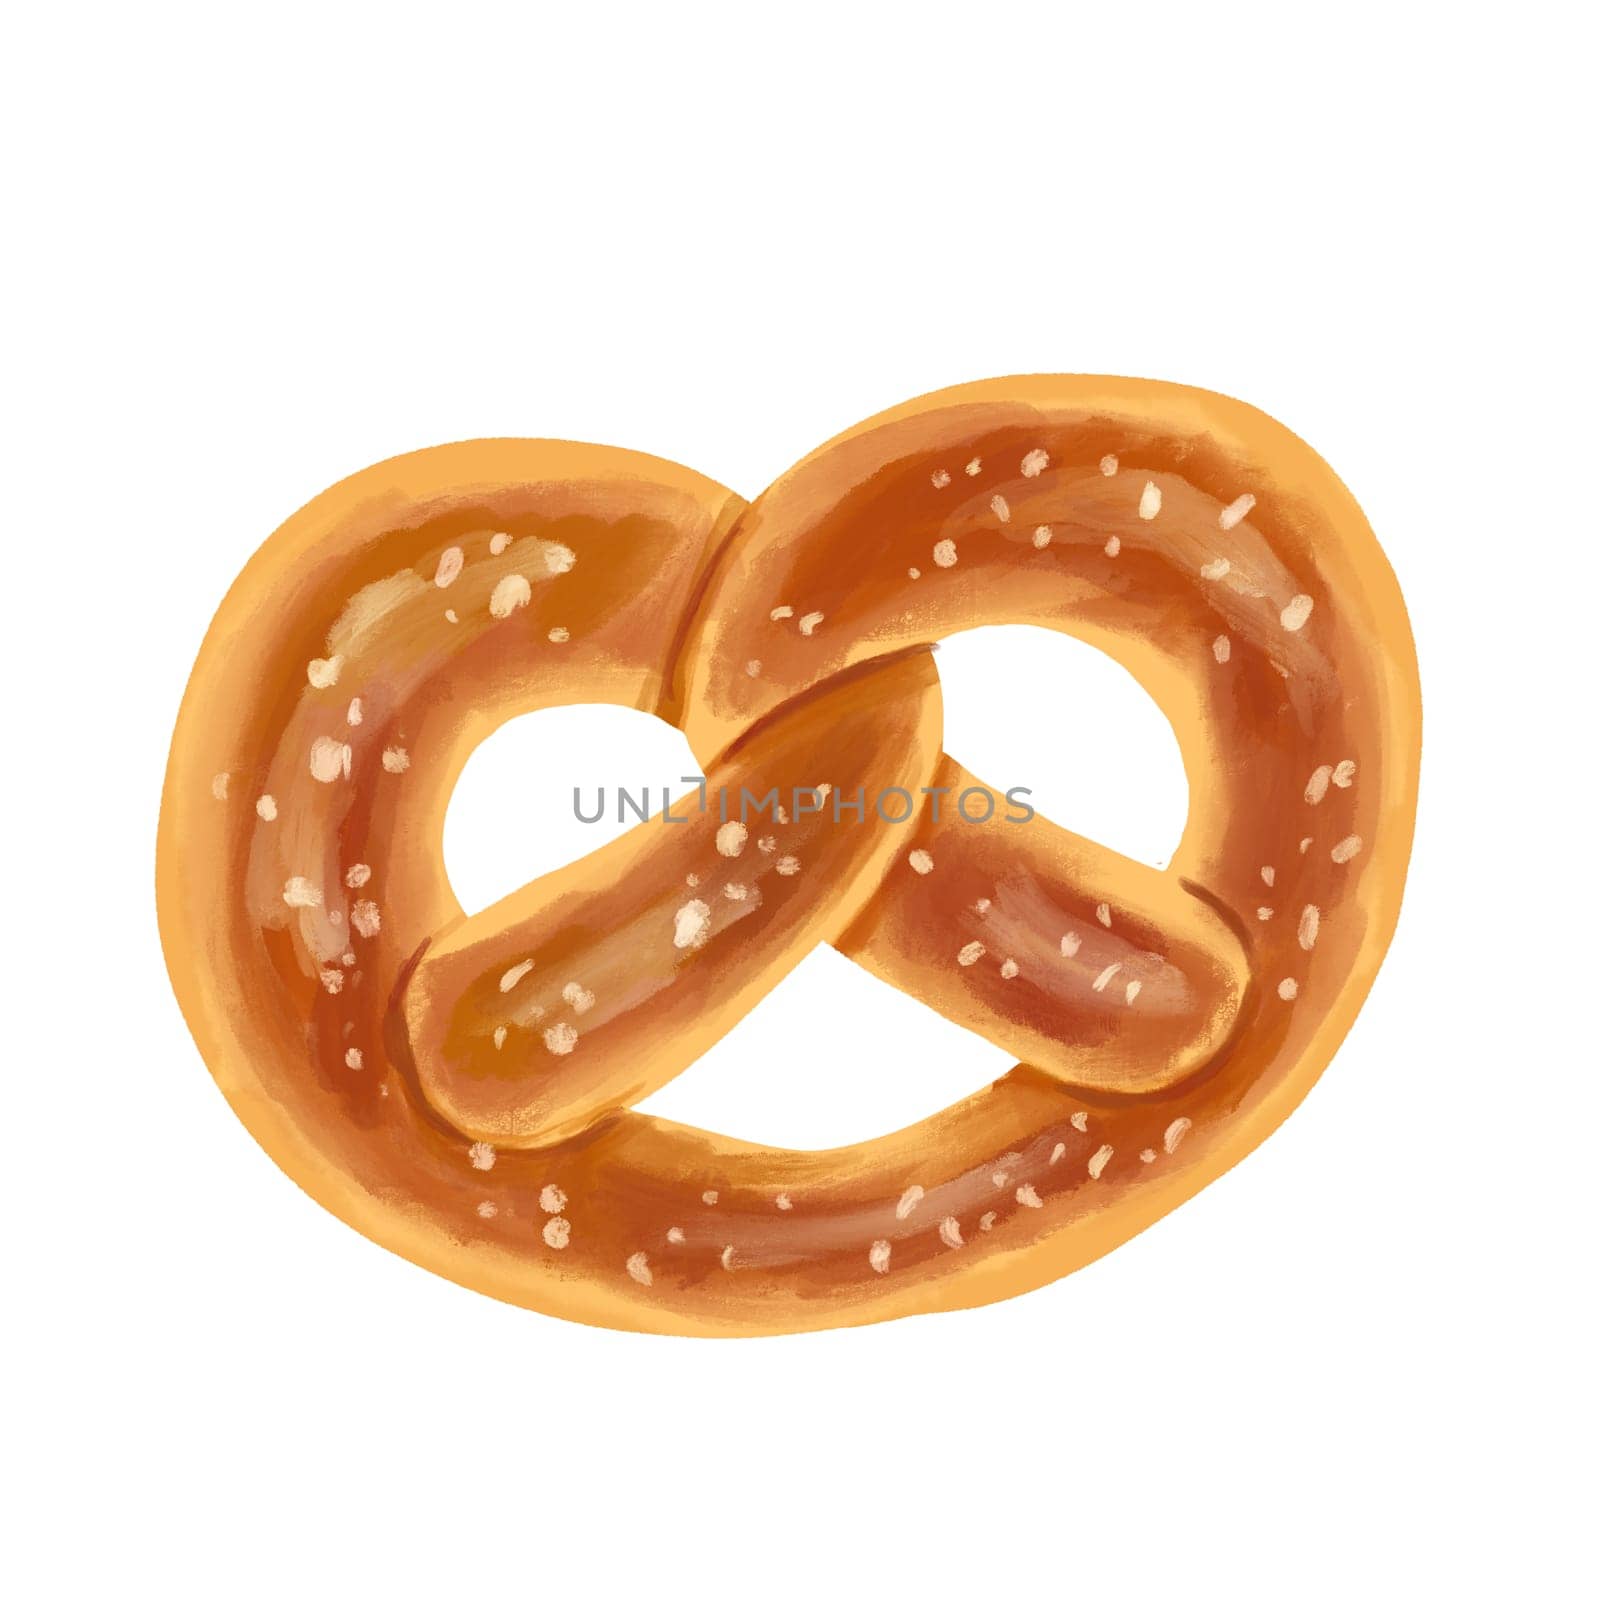 Hand drawn pretzel isolated on white background. Food illustration isolated on white. by ElenaPlatova